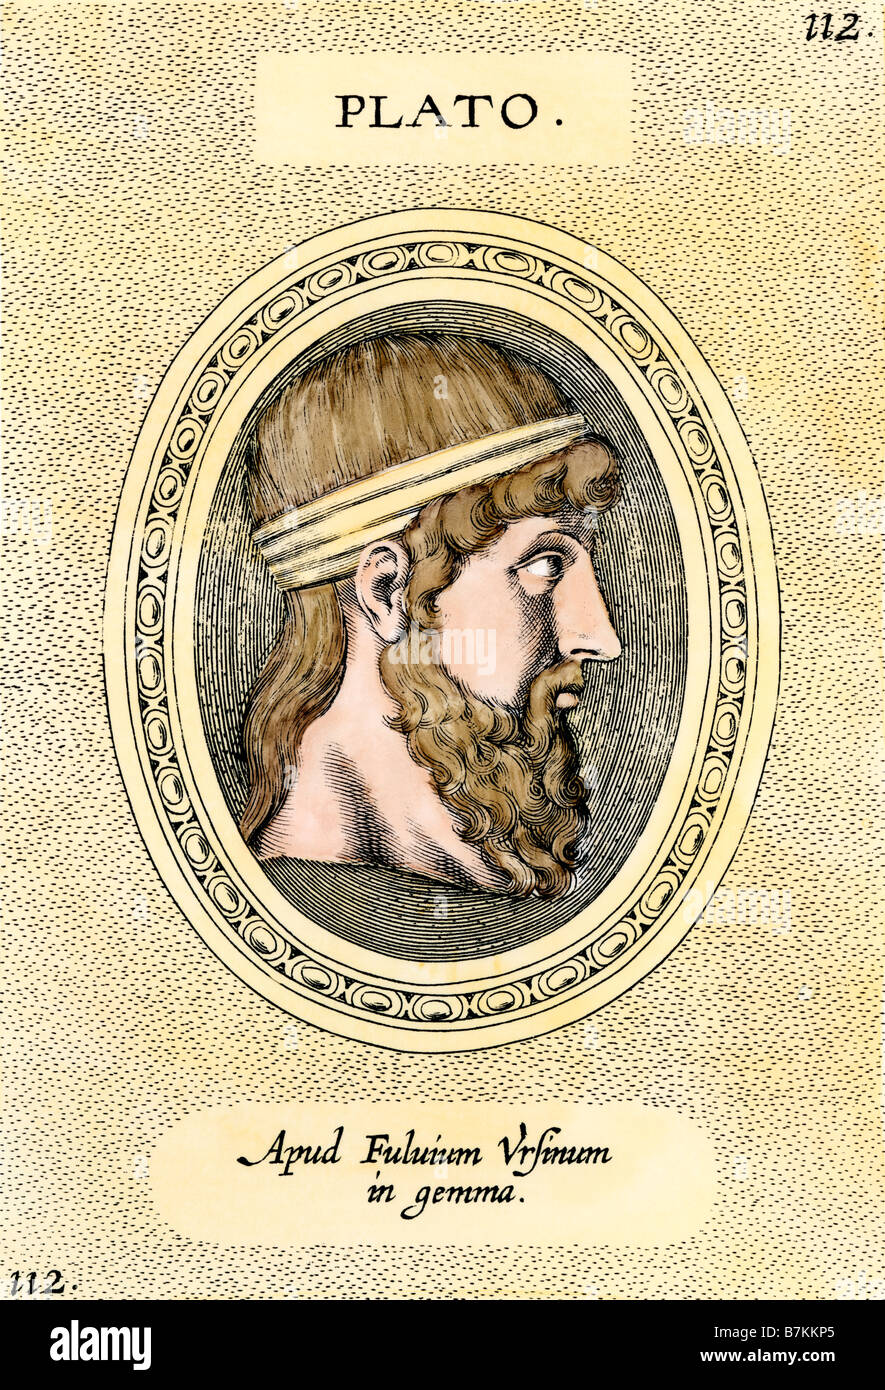 Portrait of Plato. Hand-colored engraving Stock Photo